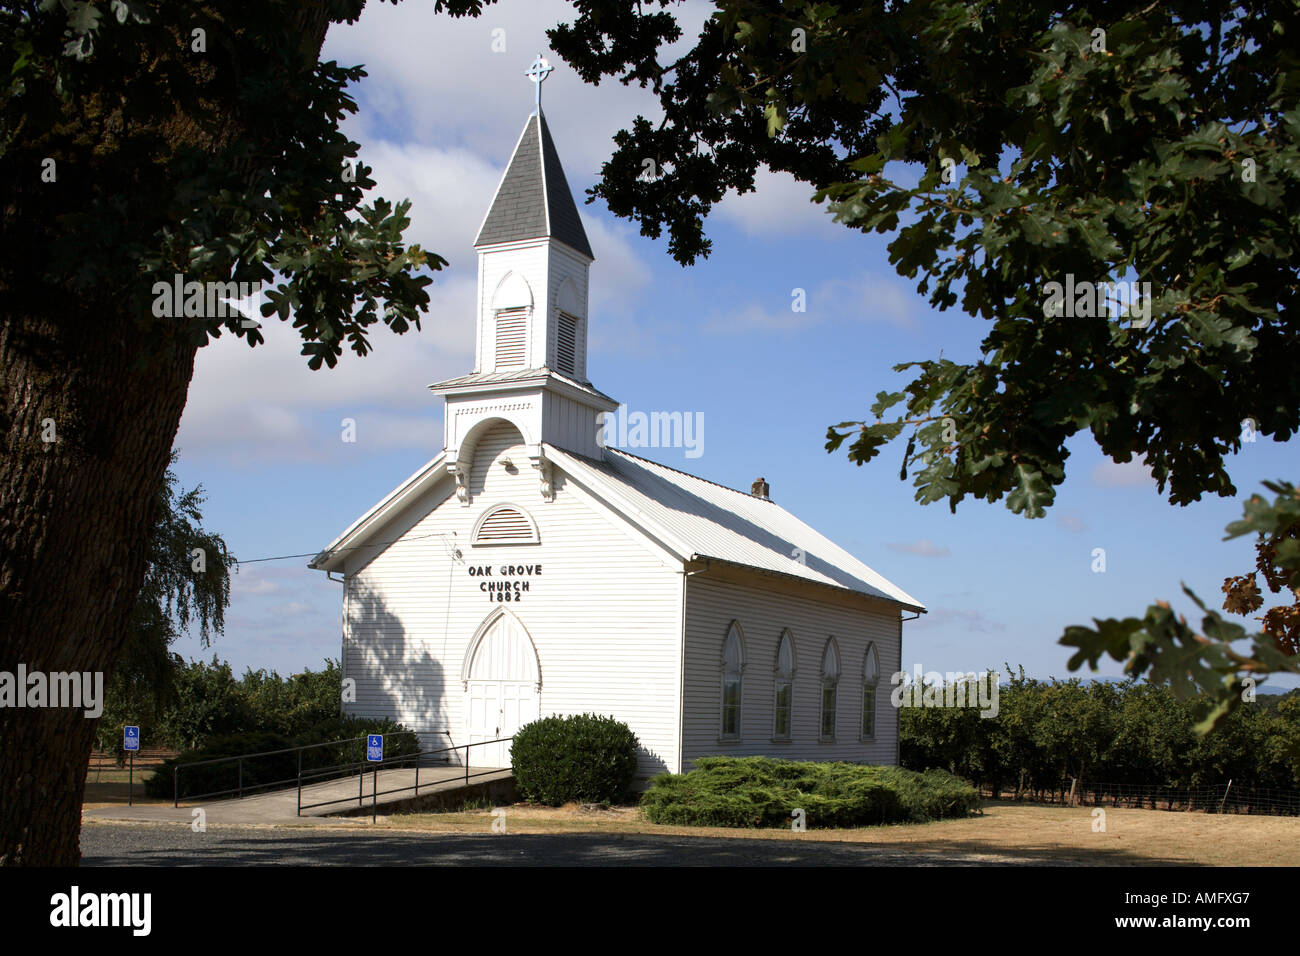 Oak Grove Church in Rural Oregon Stock Photo